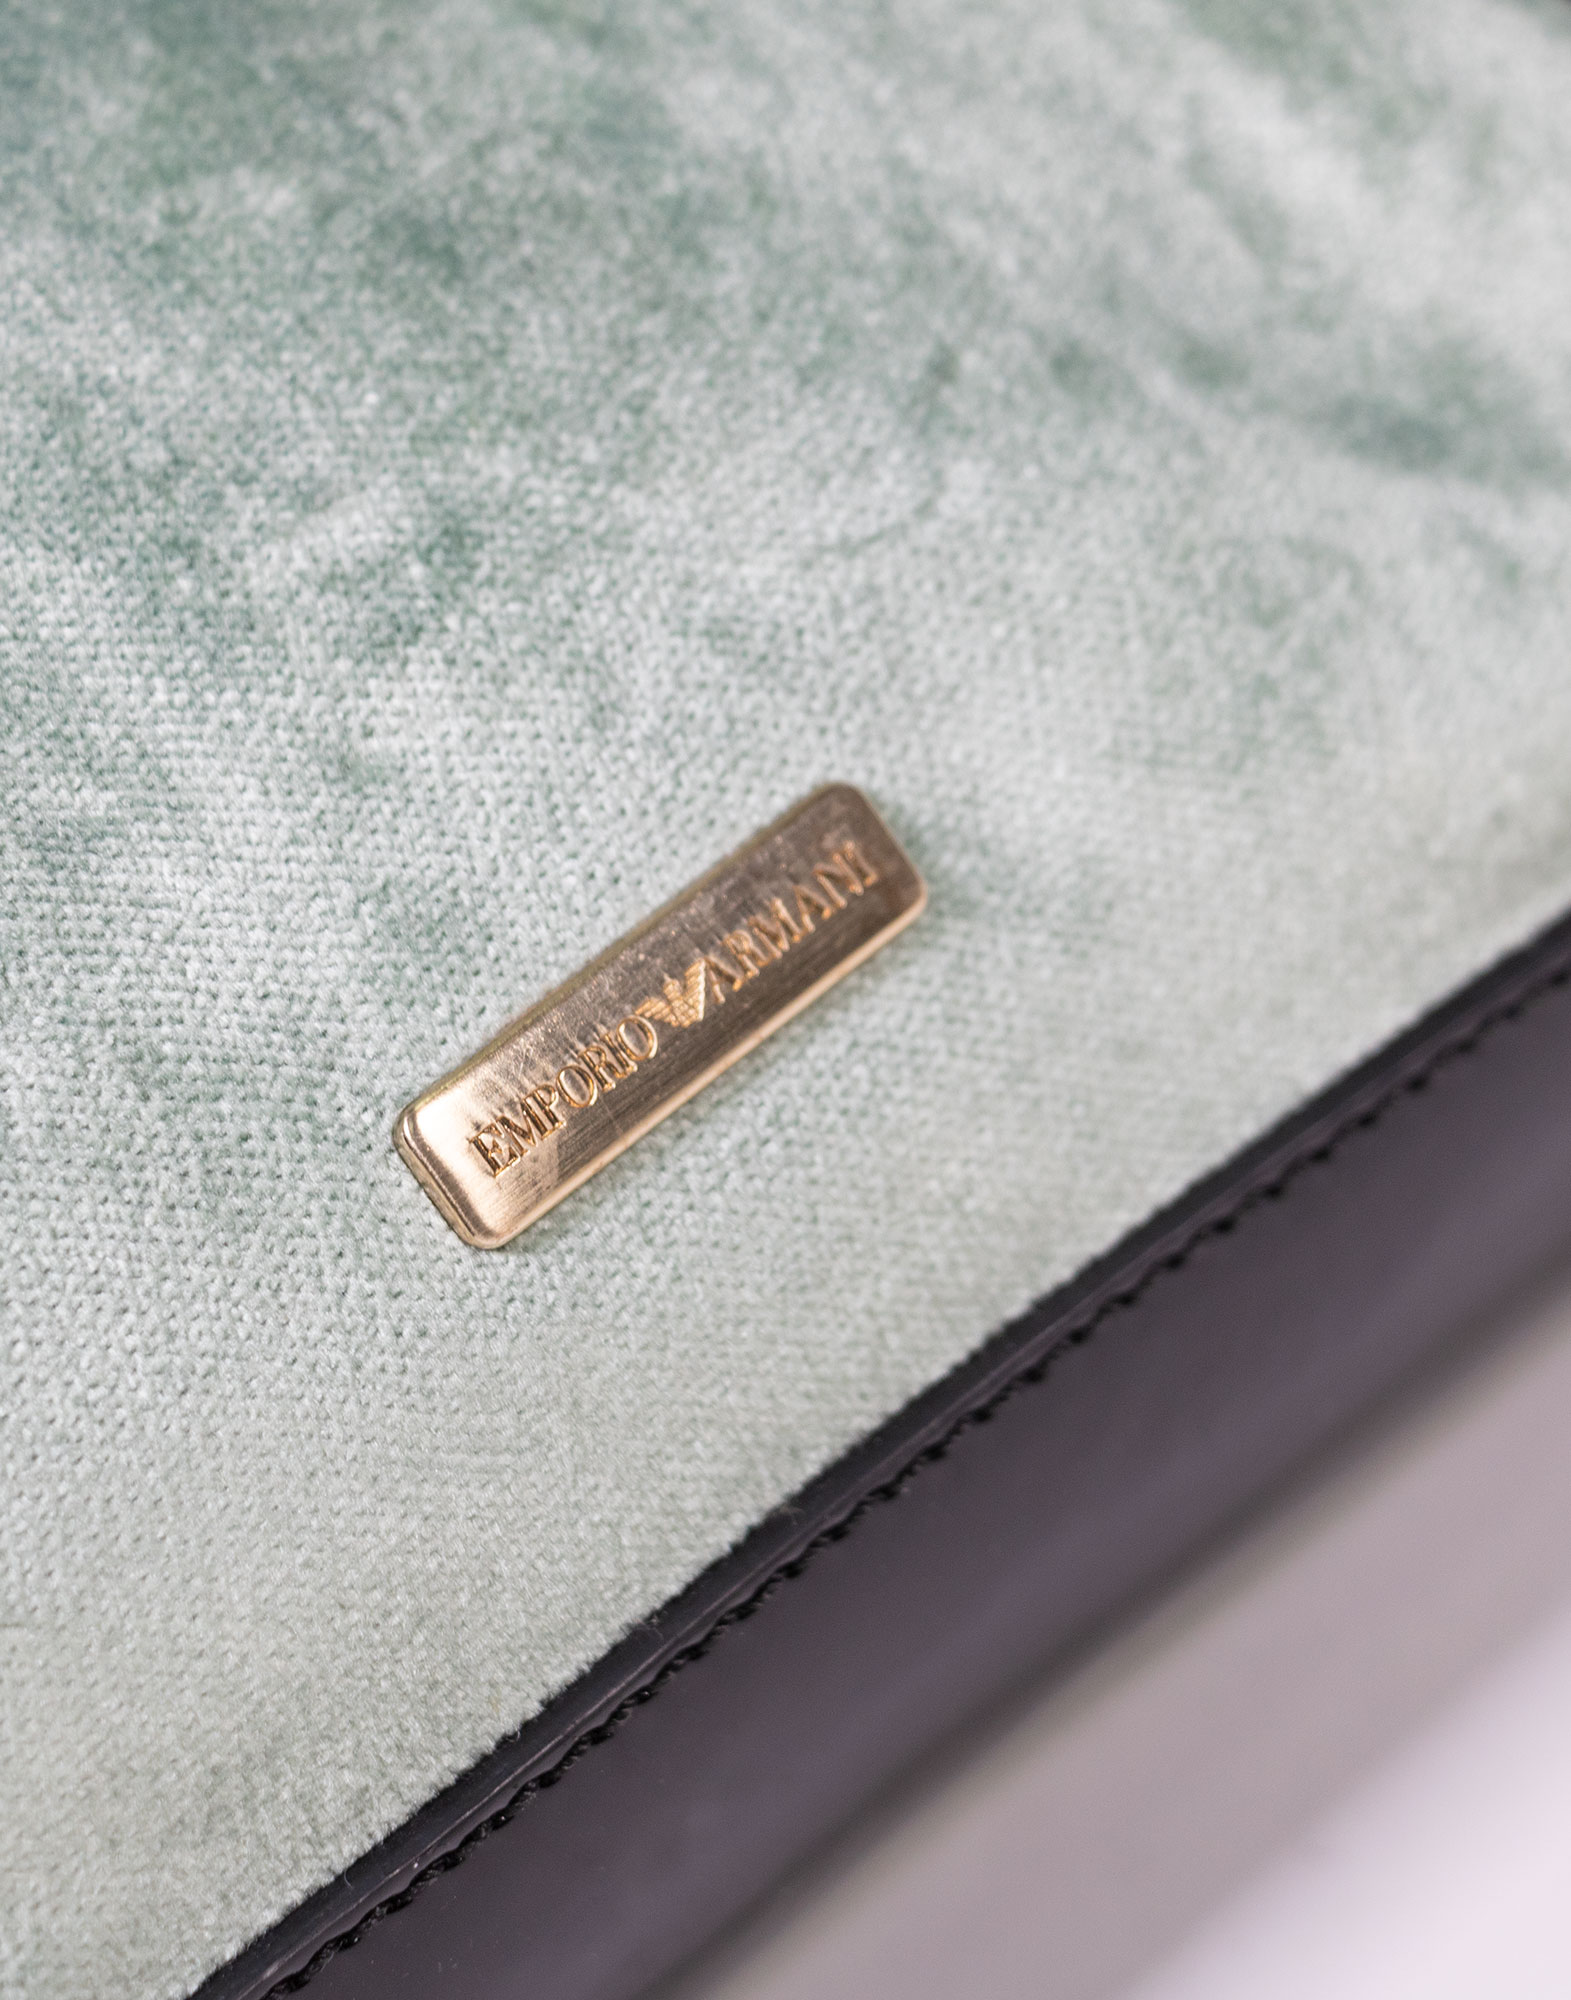 Emporio Armani - Patent leather and velvet minibag